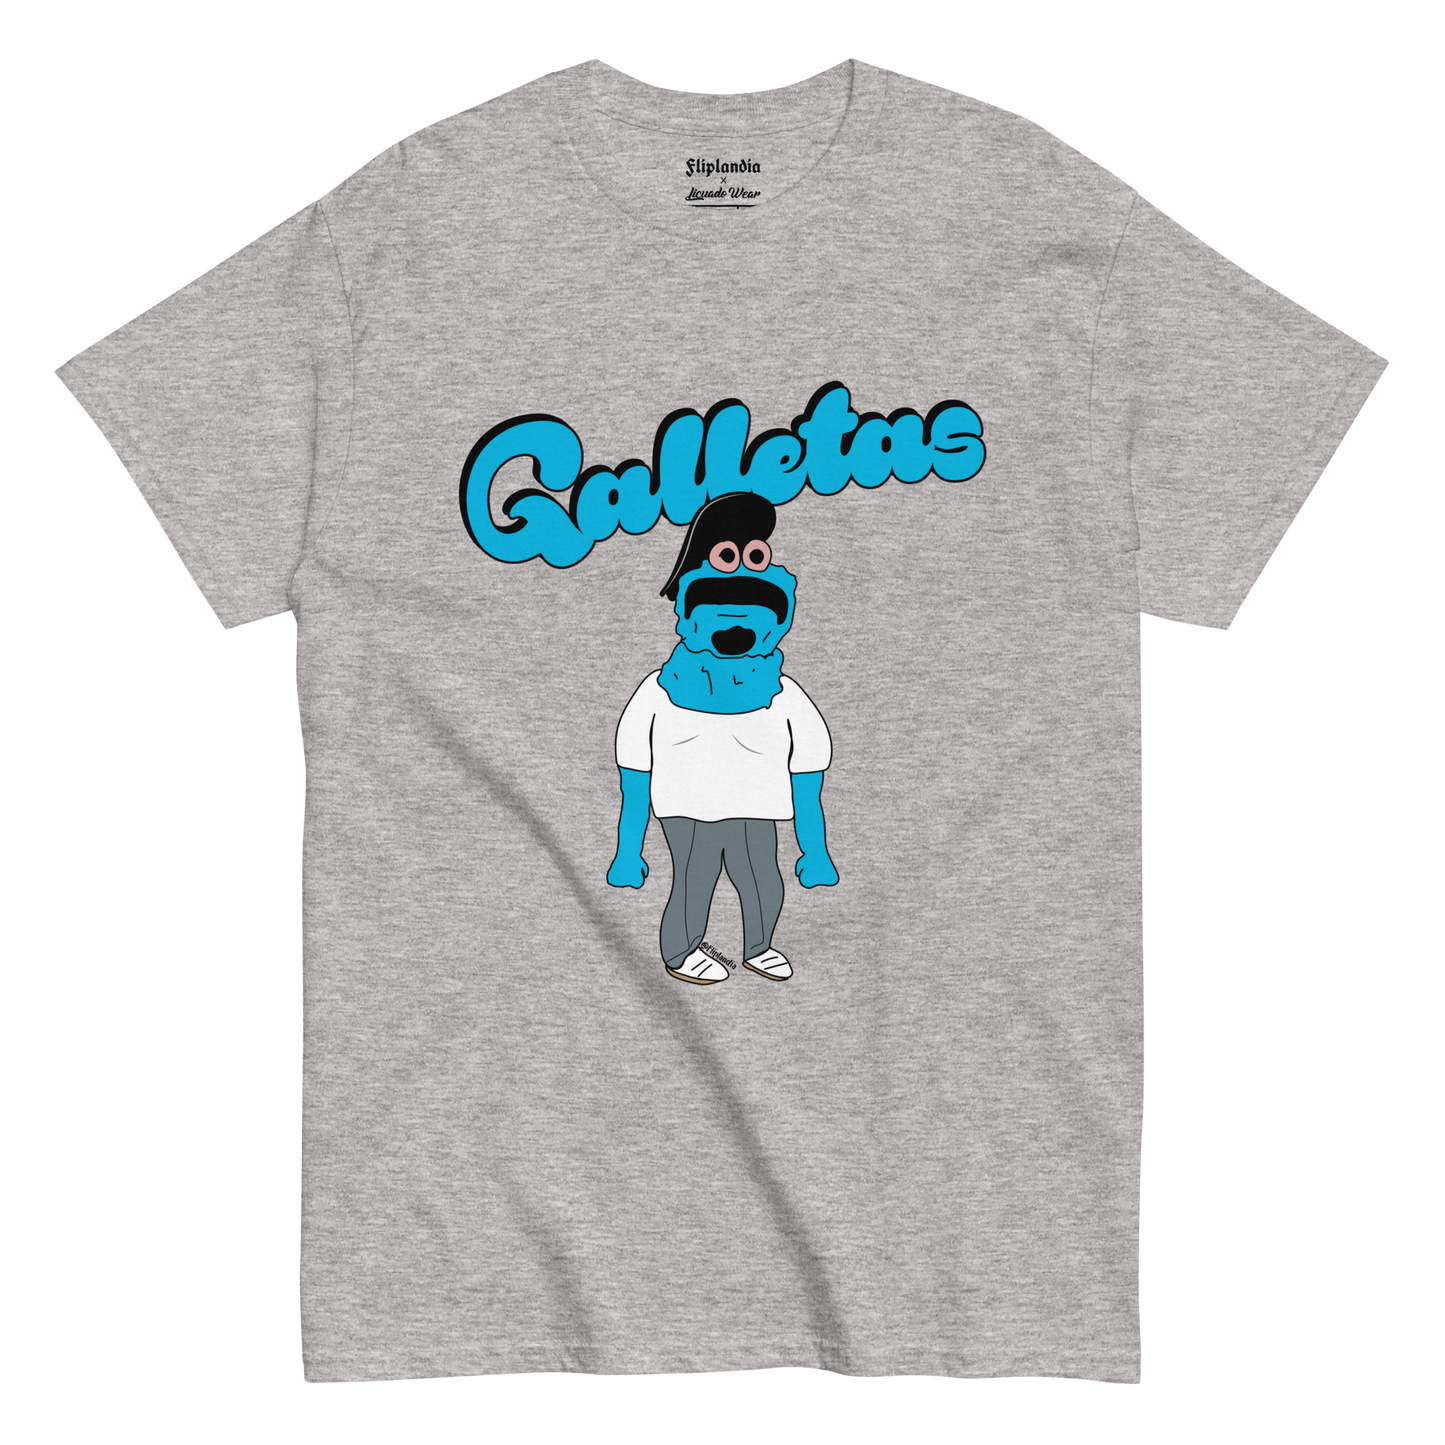 Galletas Bubble Script - Fliplandia Unisex T-shirt